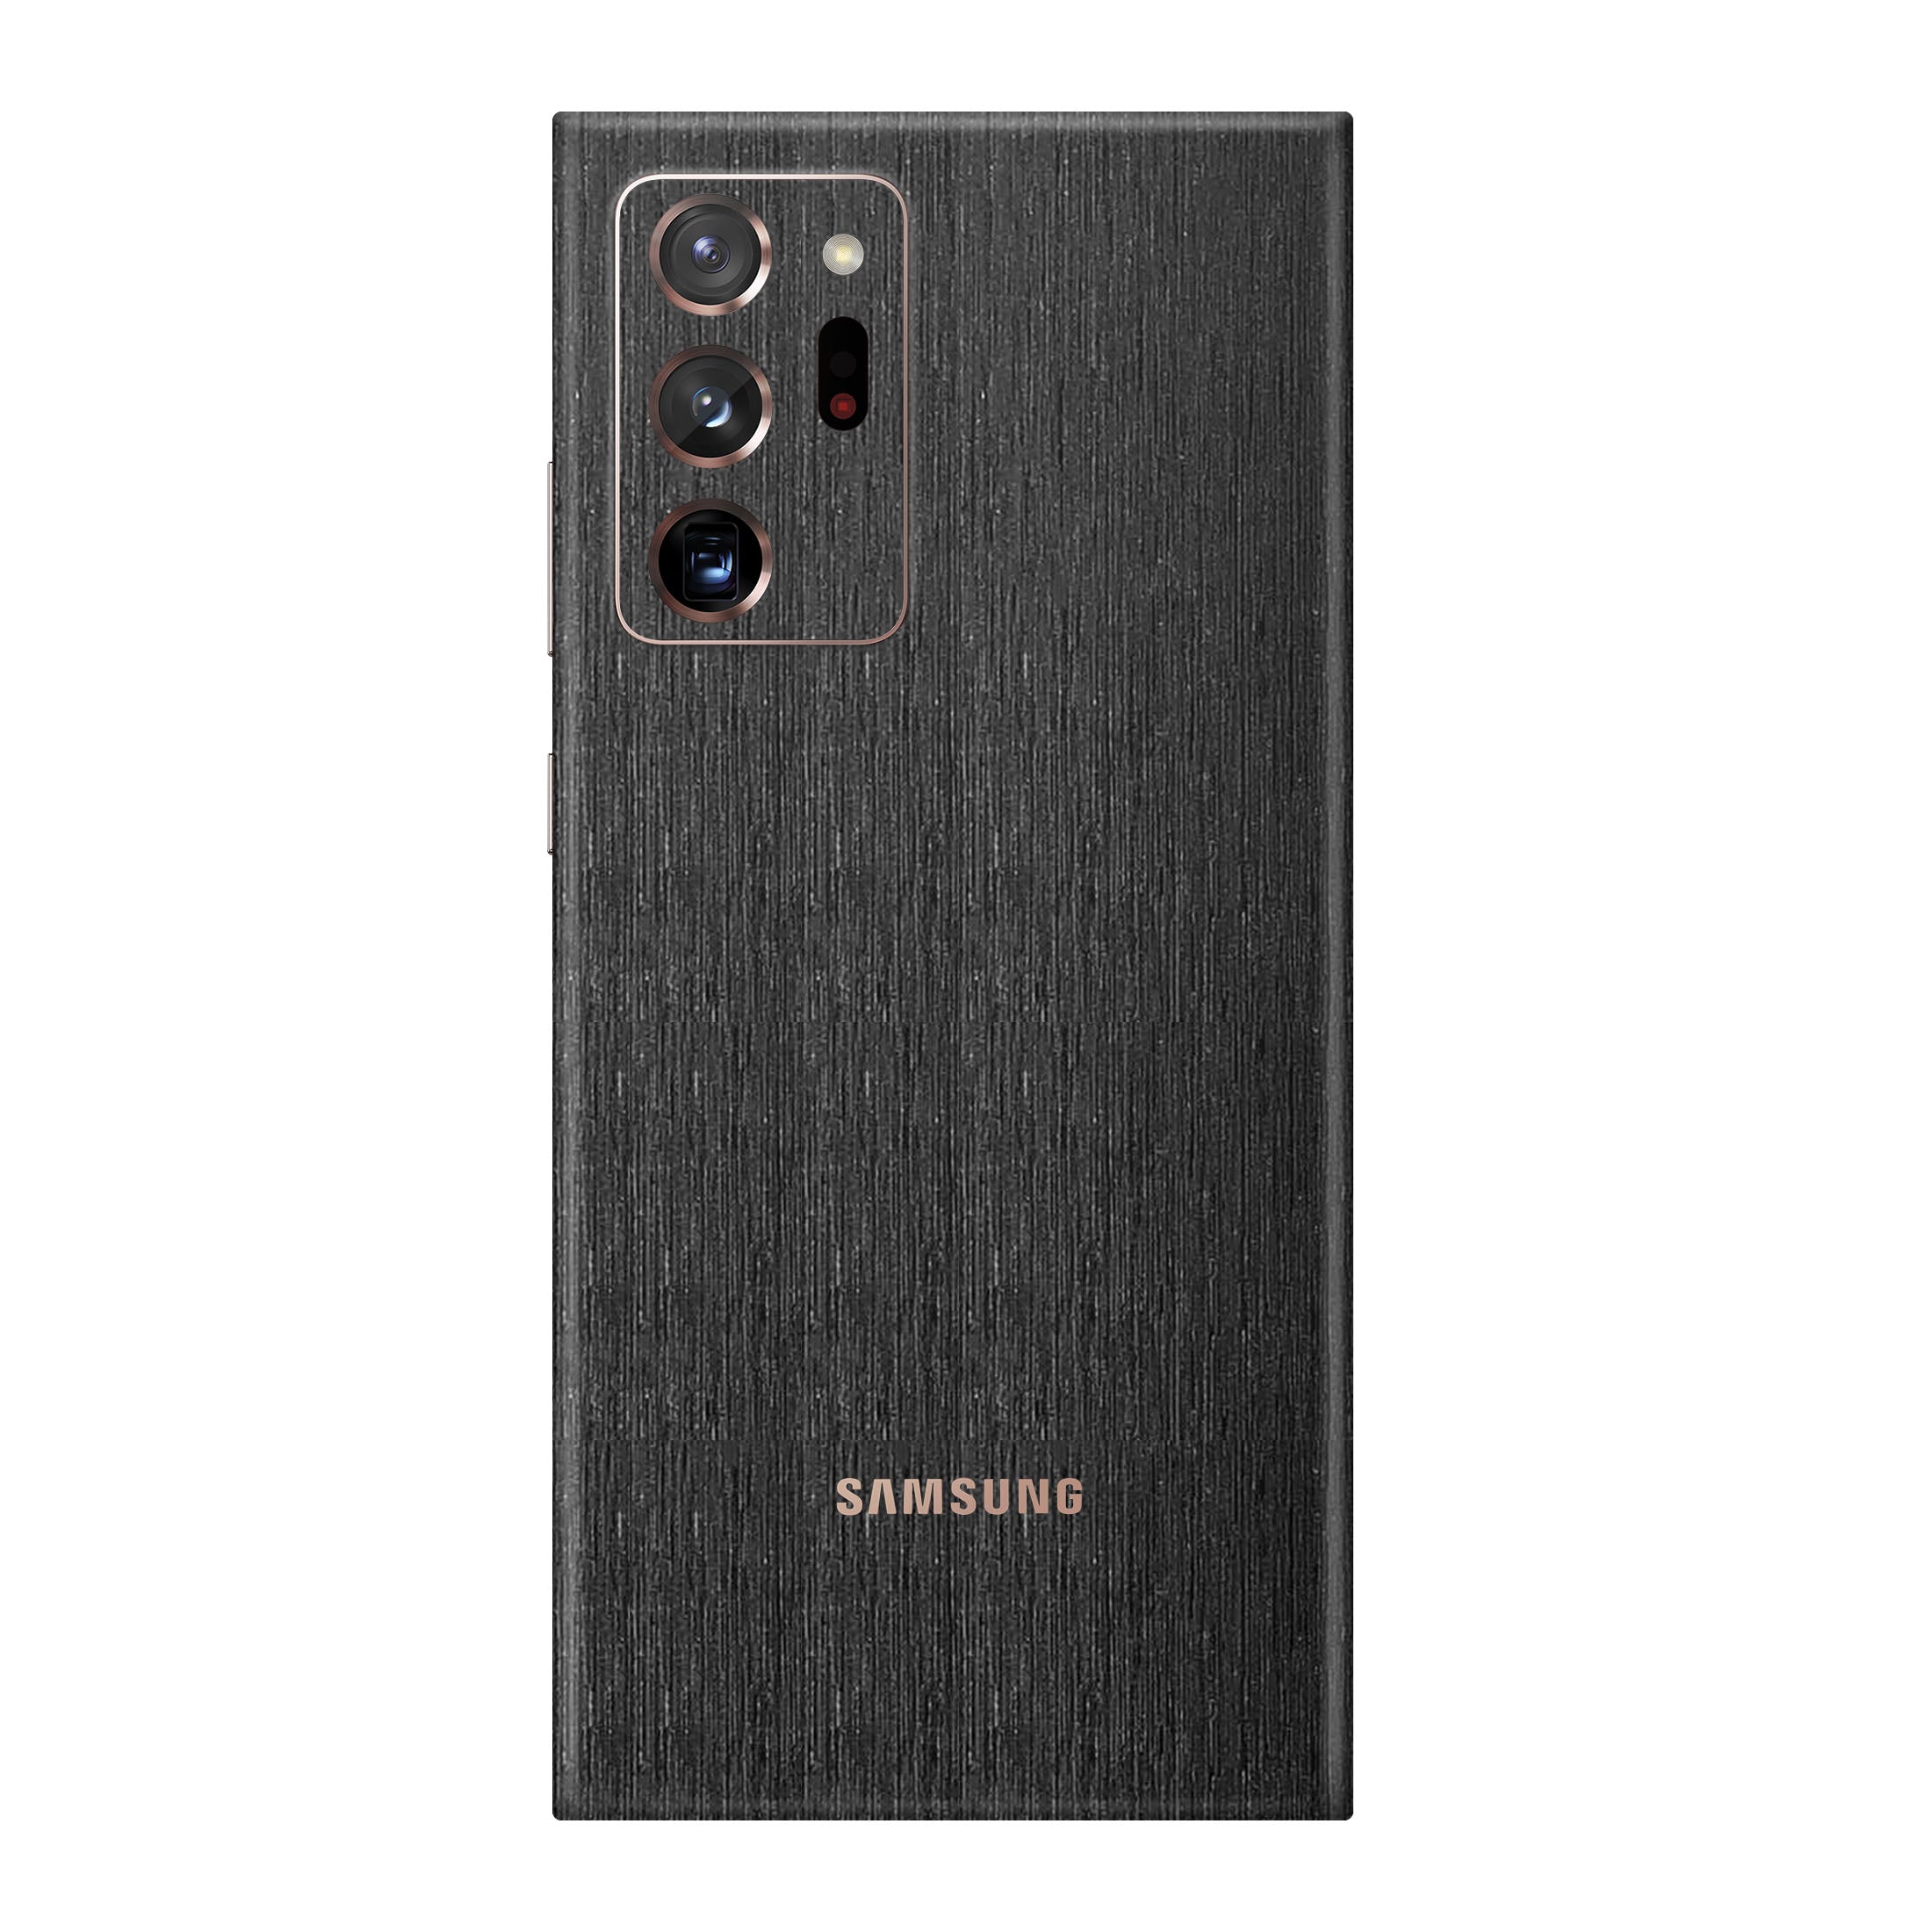 Brushed Black Metallic Skin for Samsung Note 20 Ultra